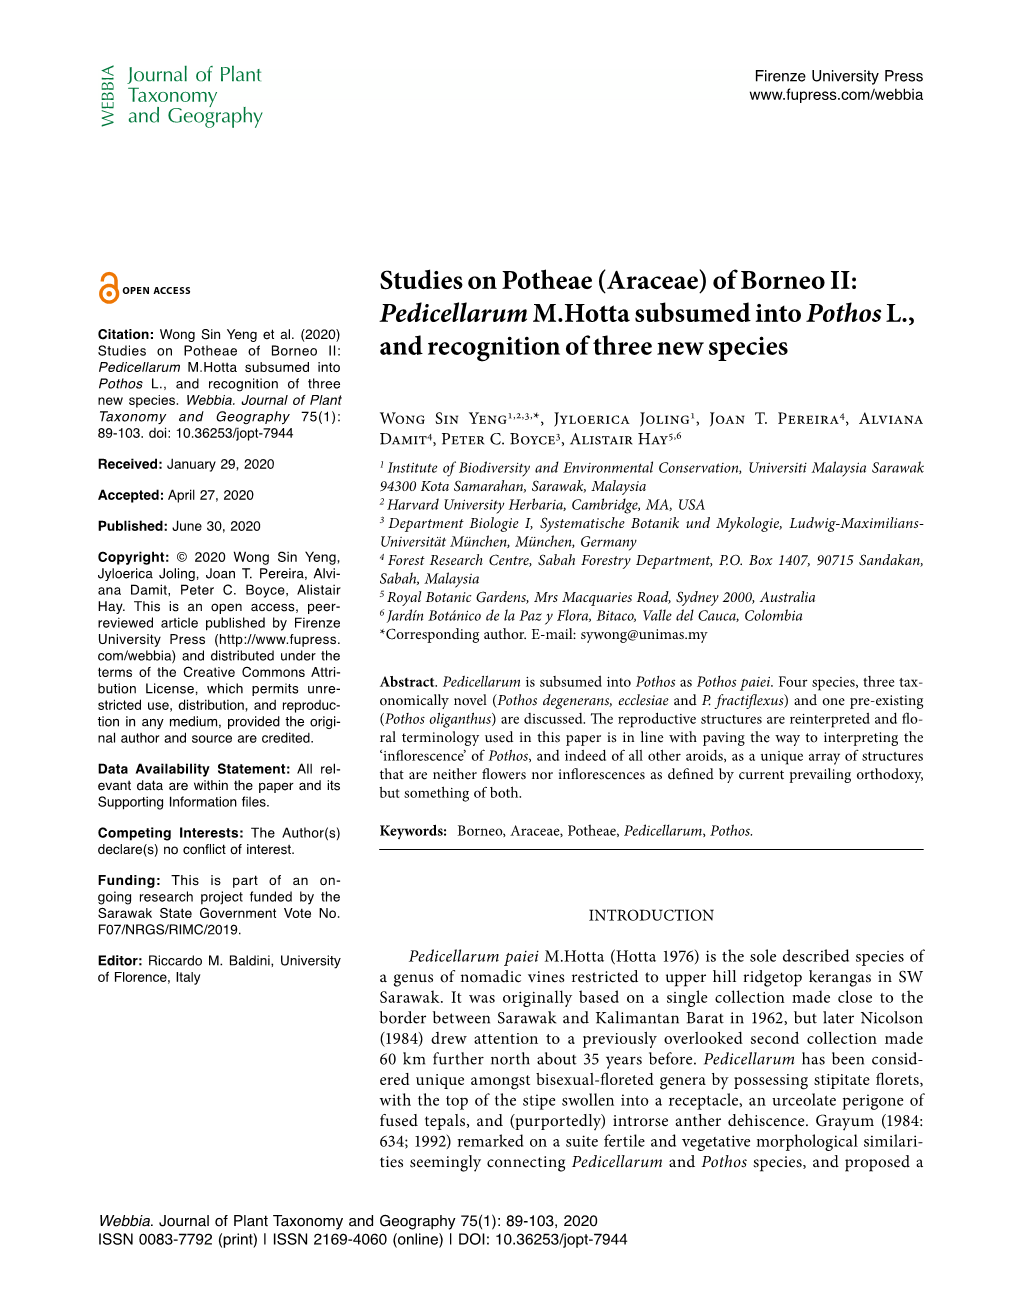 Studies on Potheae (Araceae) of Borneo II: Pedicellarum M.Hotta Subsumed Into Pothos L., Citation: Wong Sin Yeng Et Al